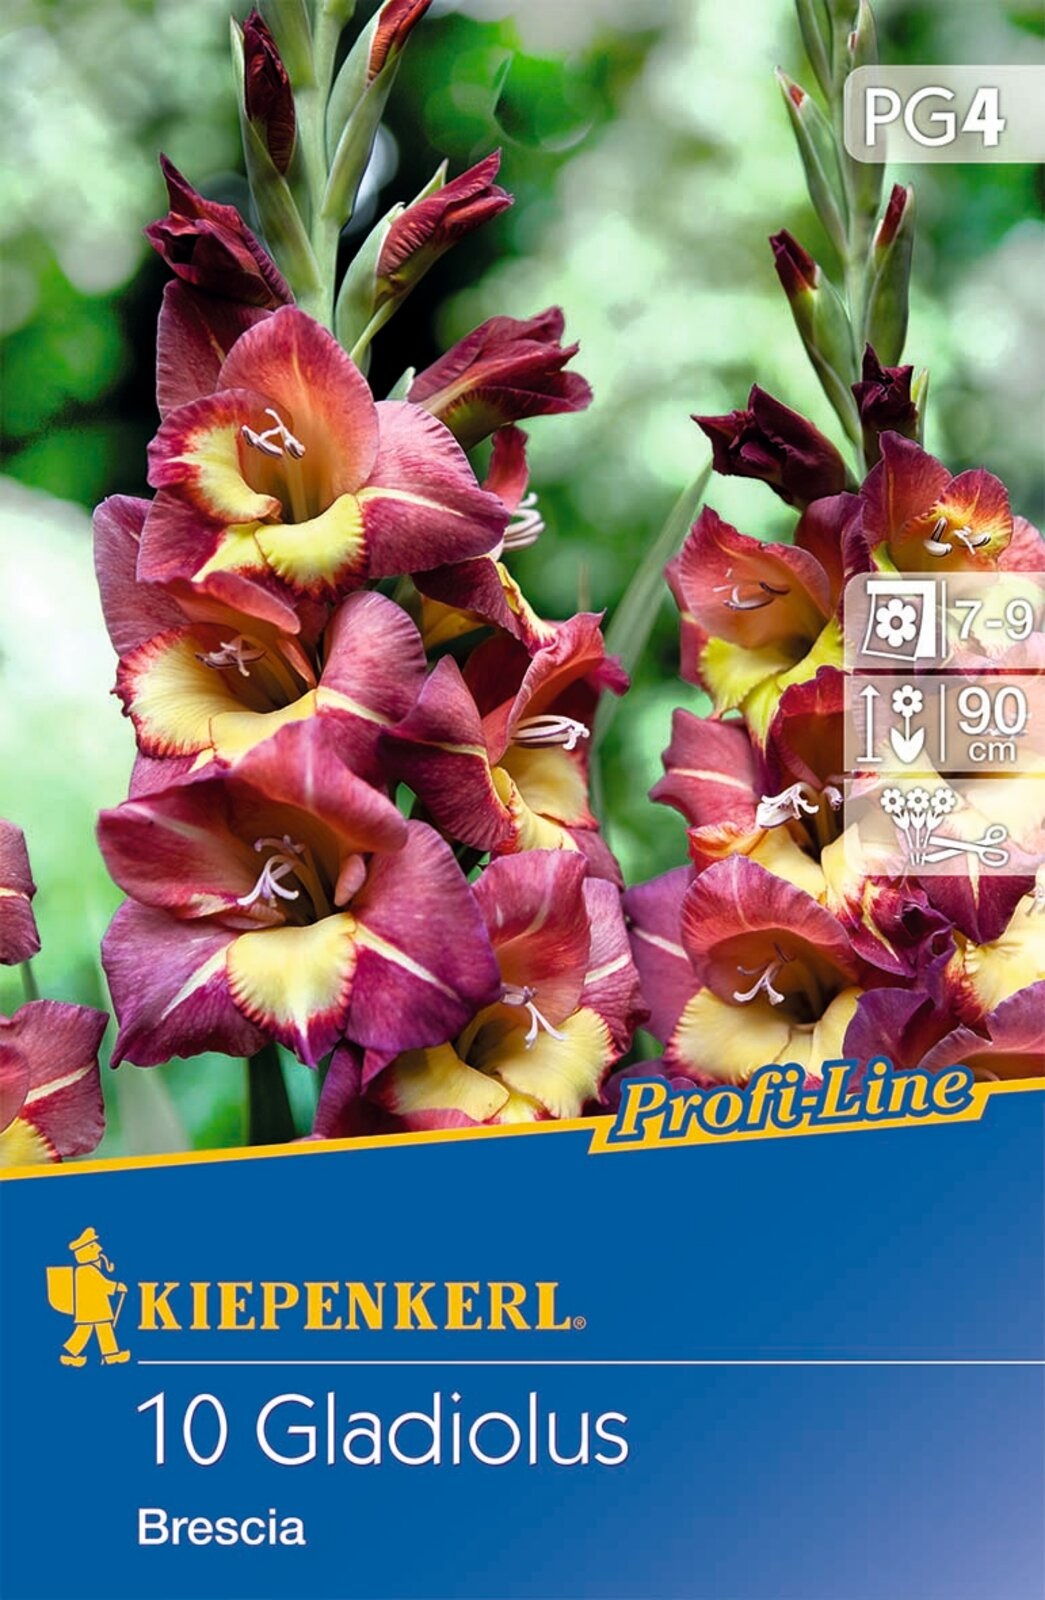 Virághagyma Kardvirág (Gladiolus) Brescia (bordó-sárga ) Kiepenkerl 10 db